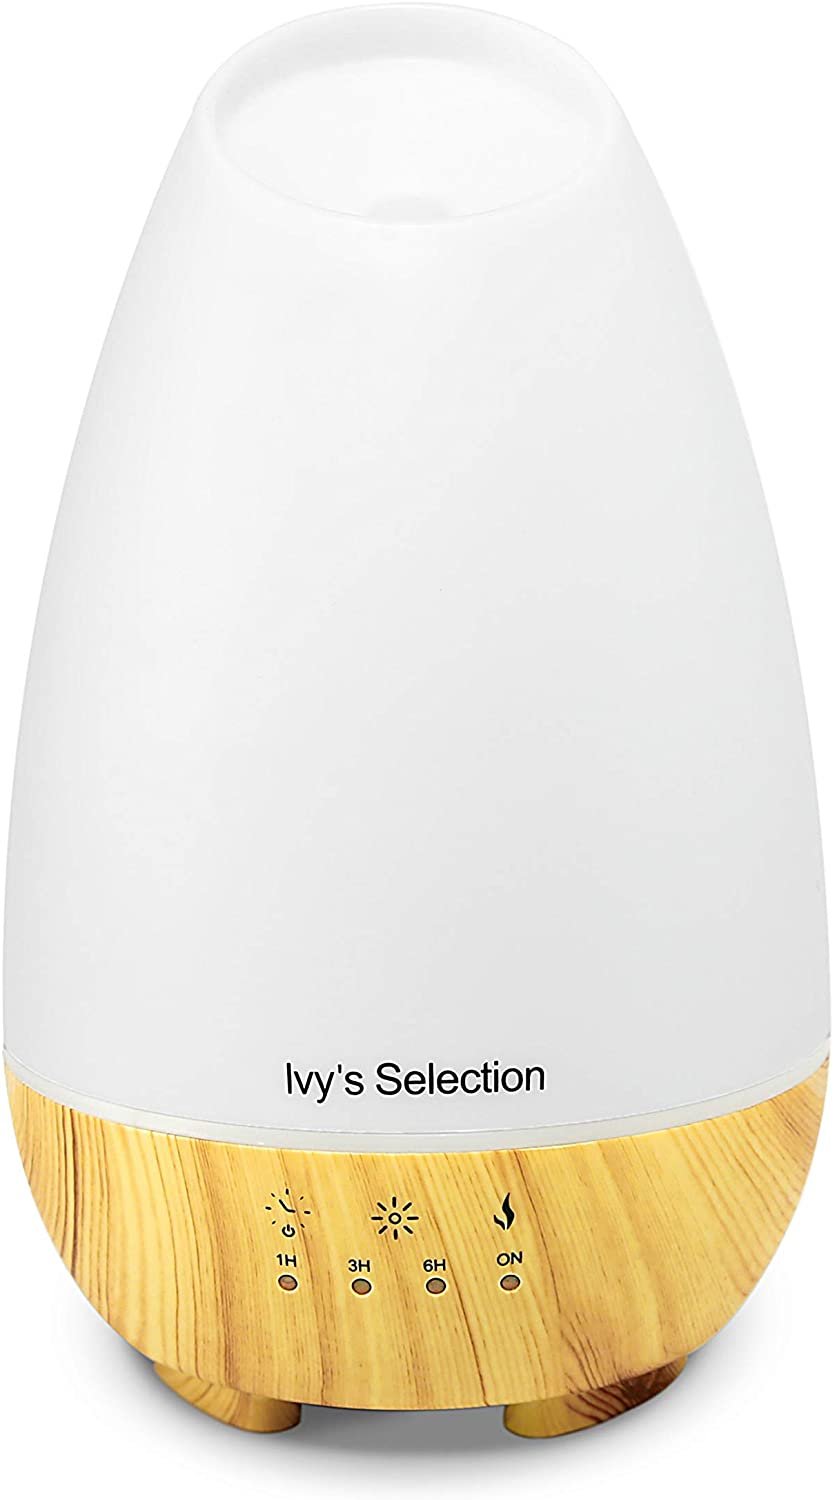 Ivy's Selection Premium Oil Diffuser